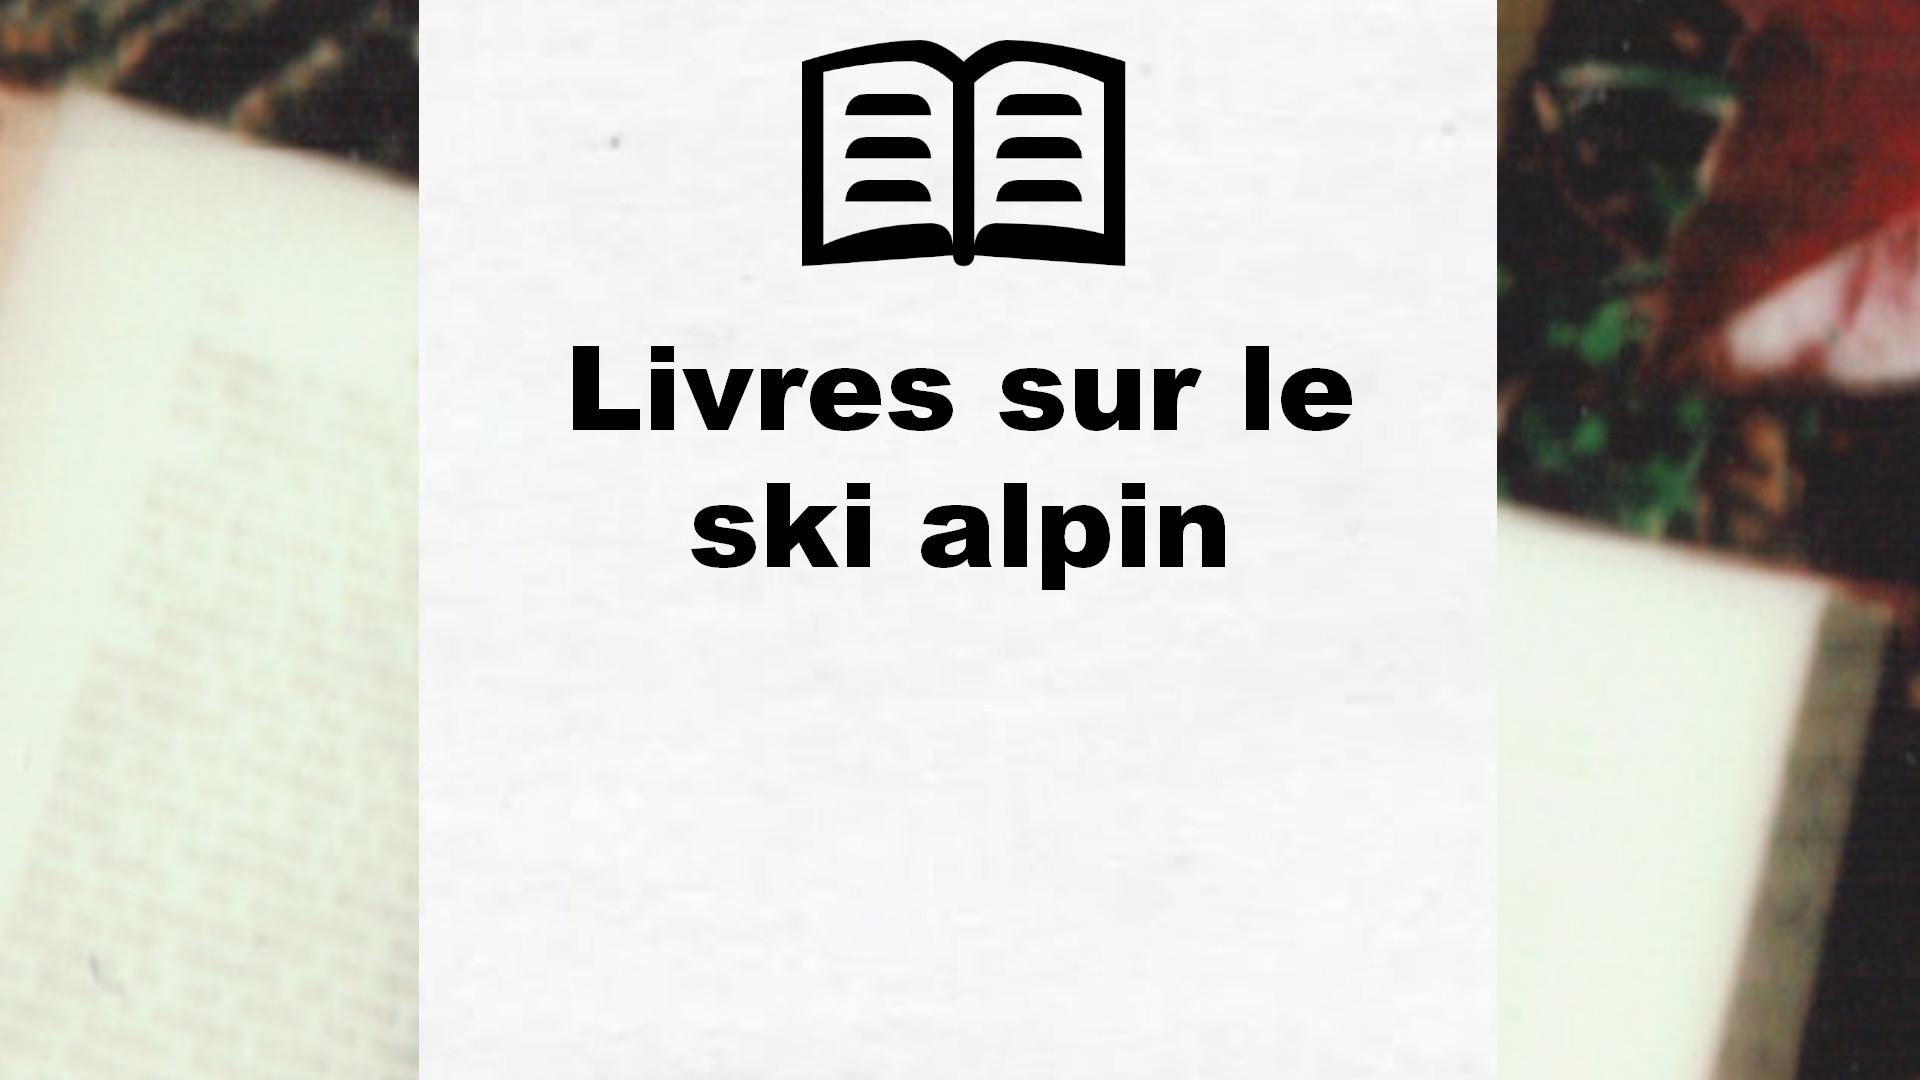 Livres sur le ski alpin